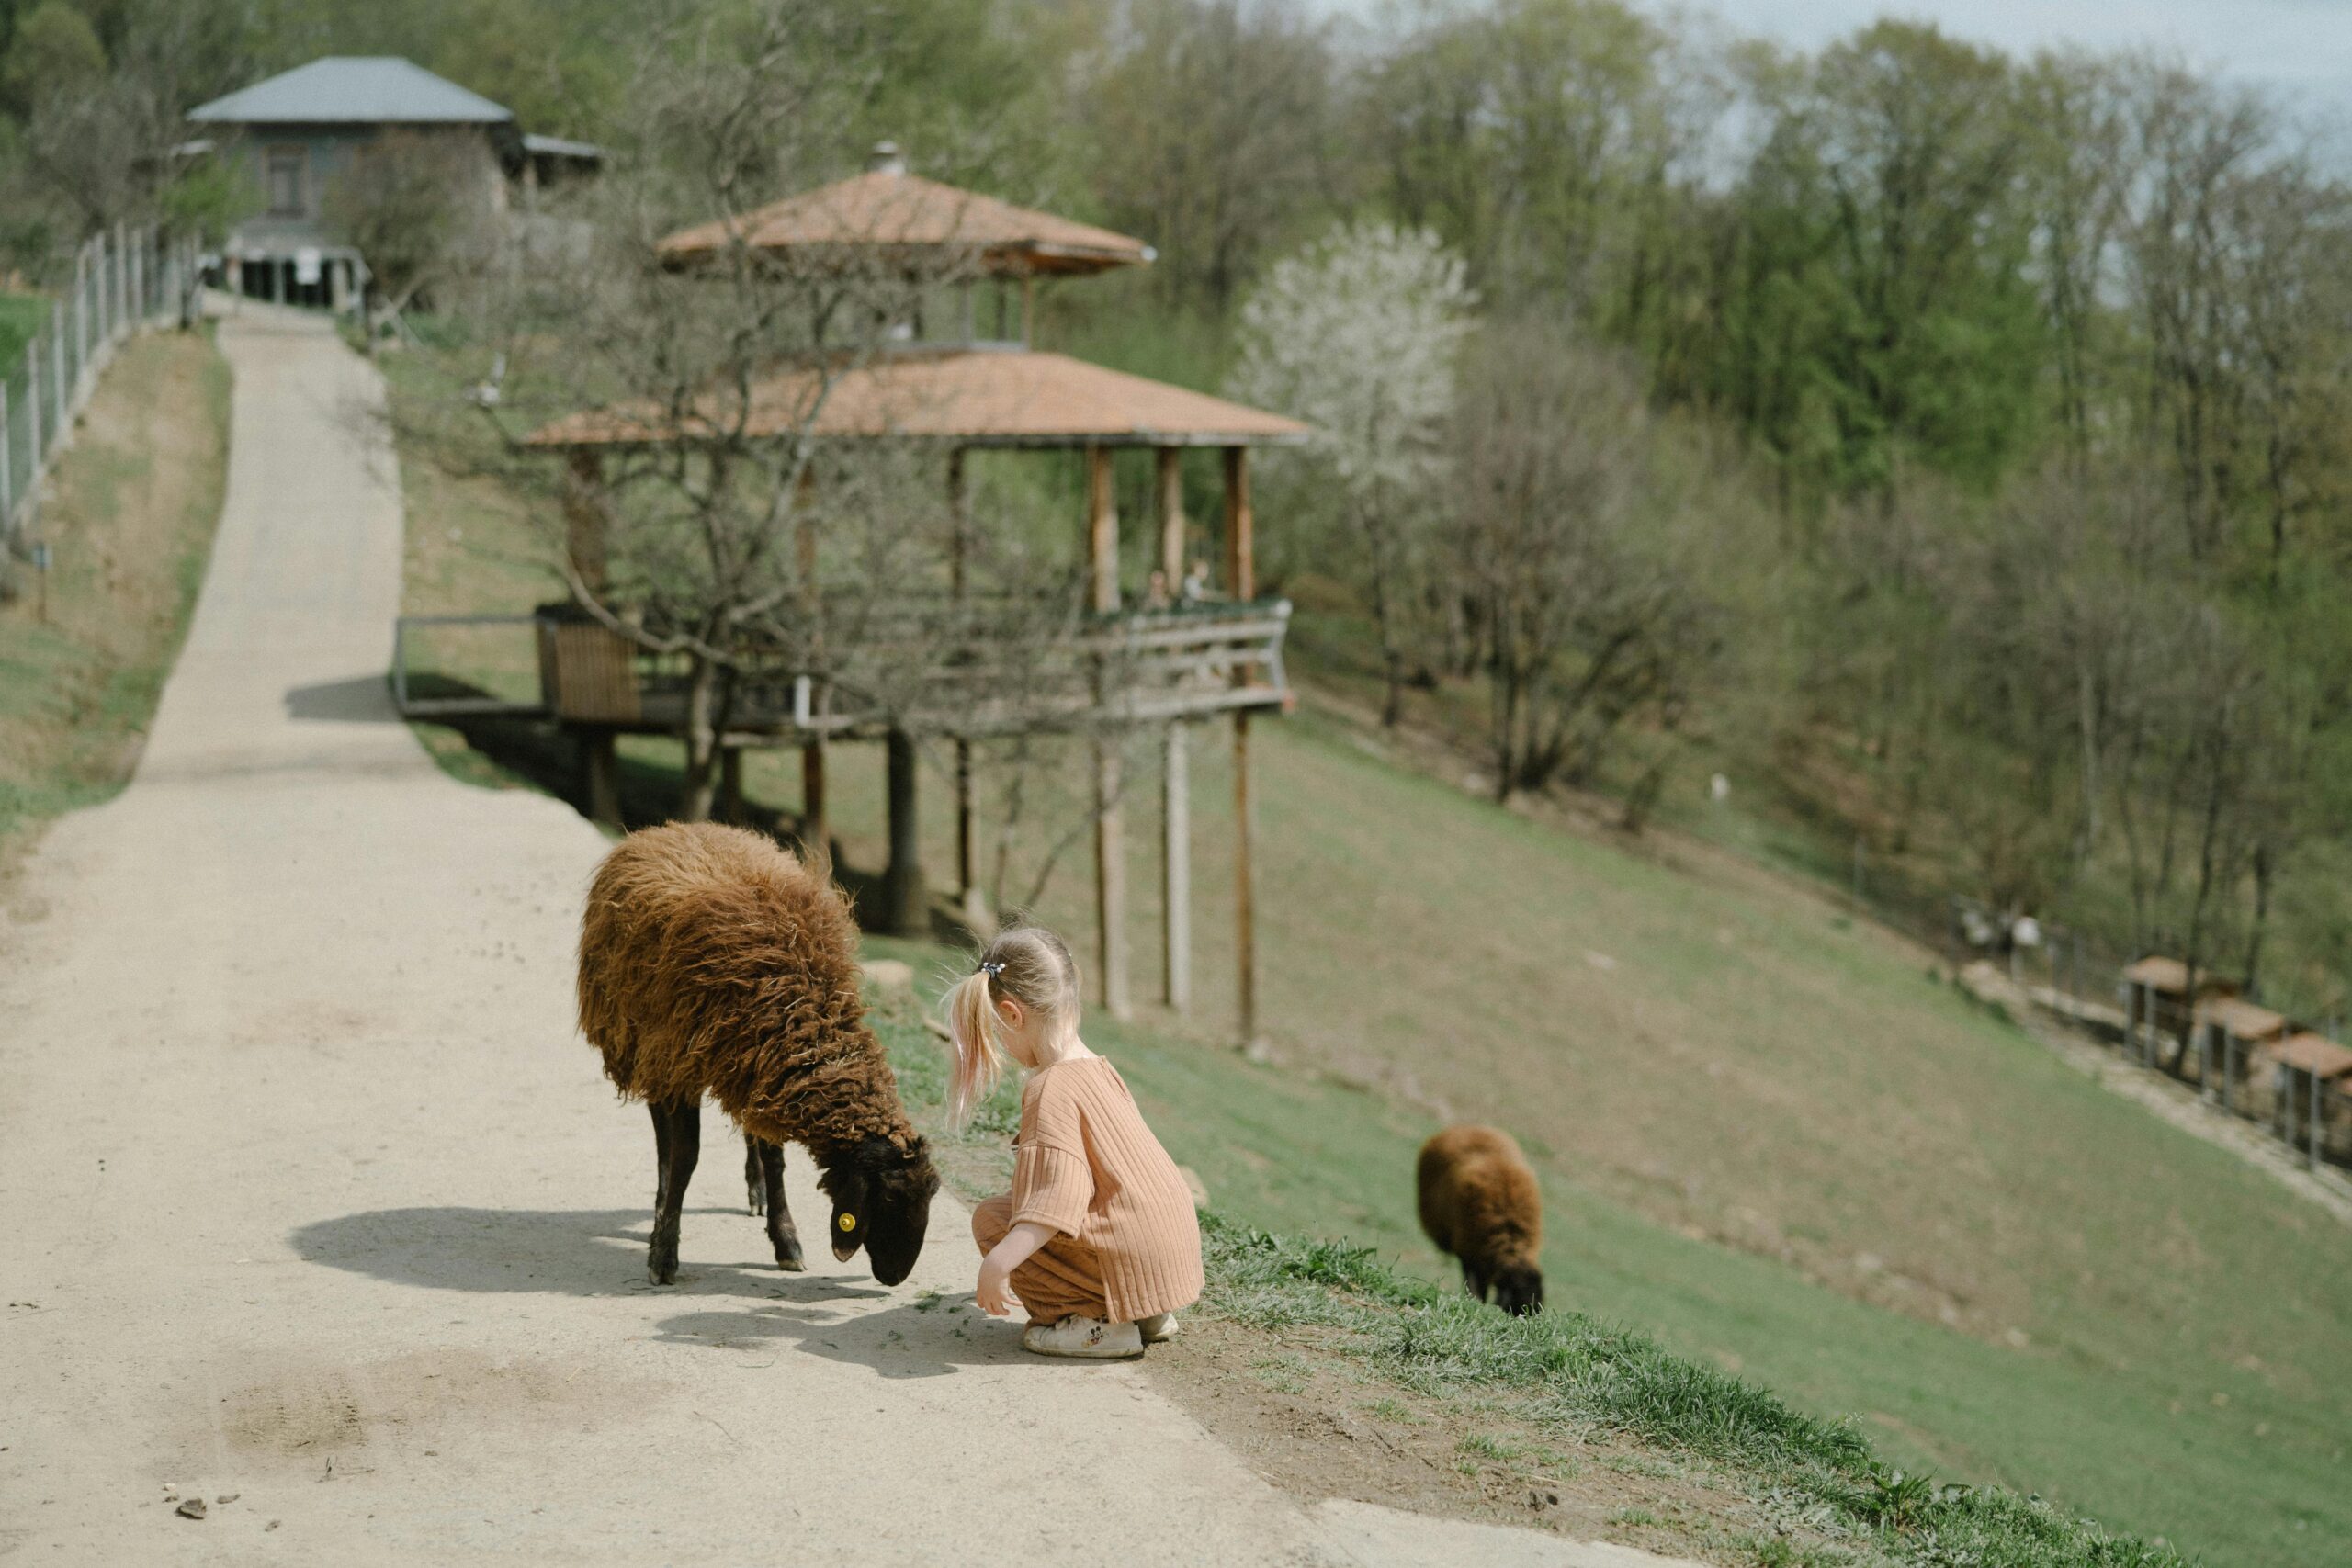 Photo by Anastasia Shuraeva: https://www.pexels.com/photo/a-young-girl-feeding-a-brown-goat-7671956/